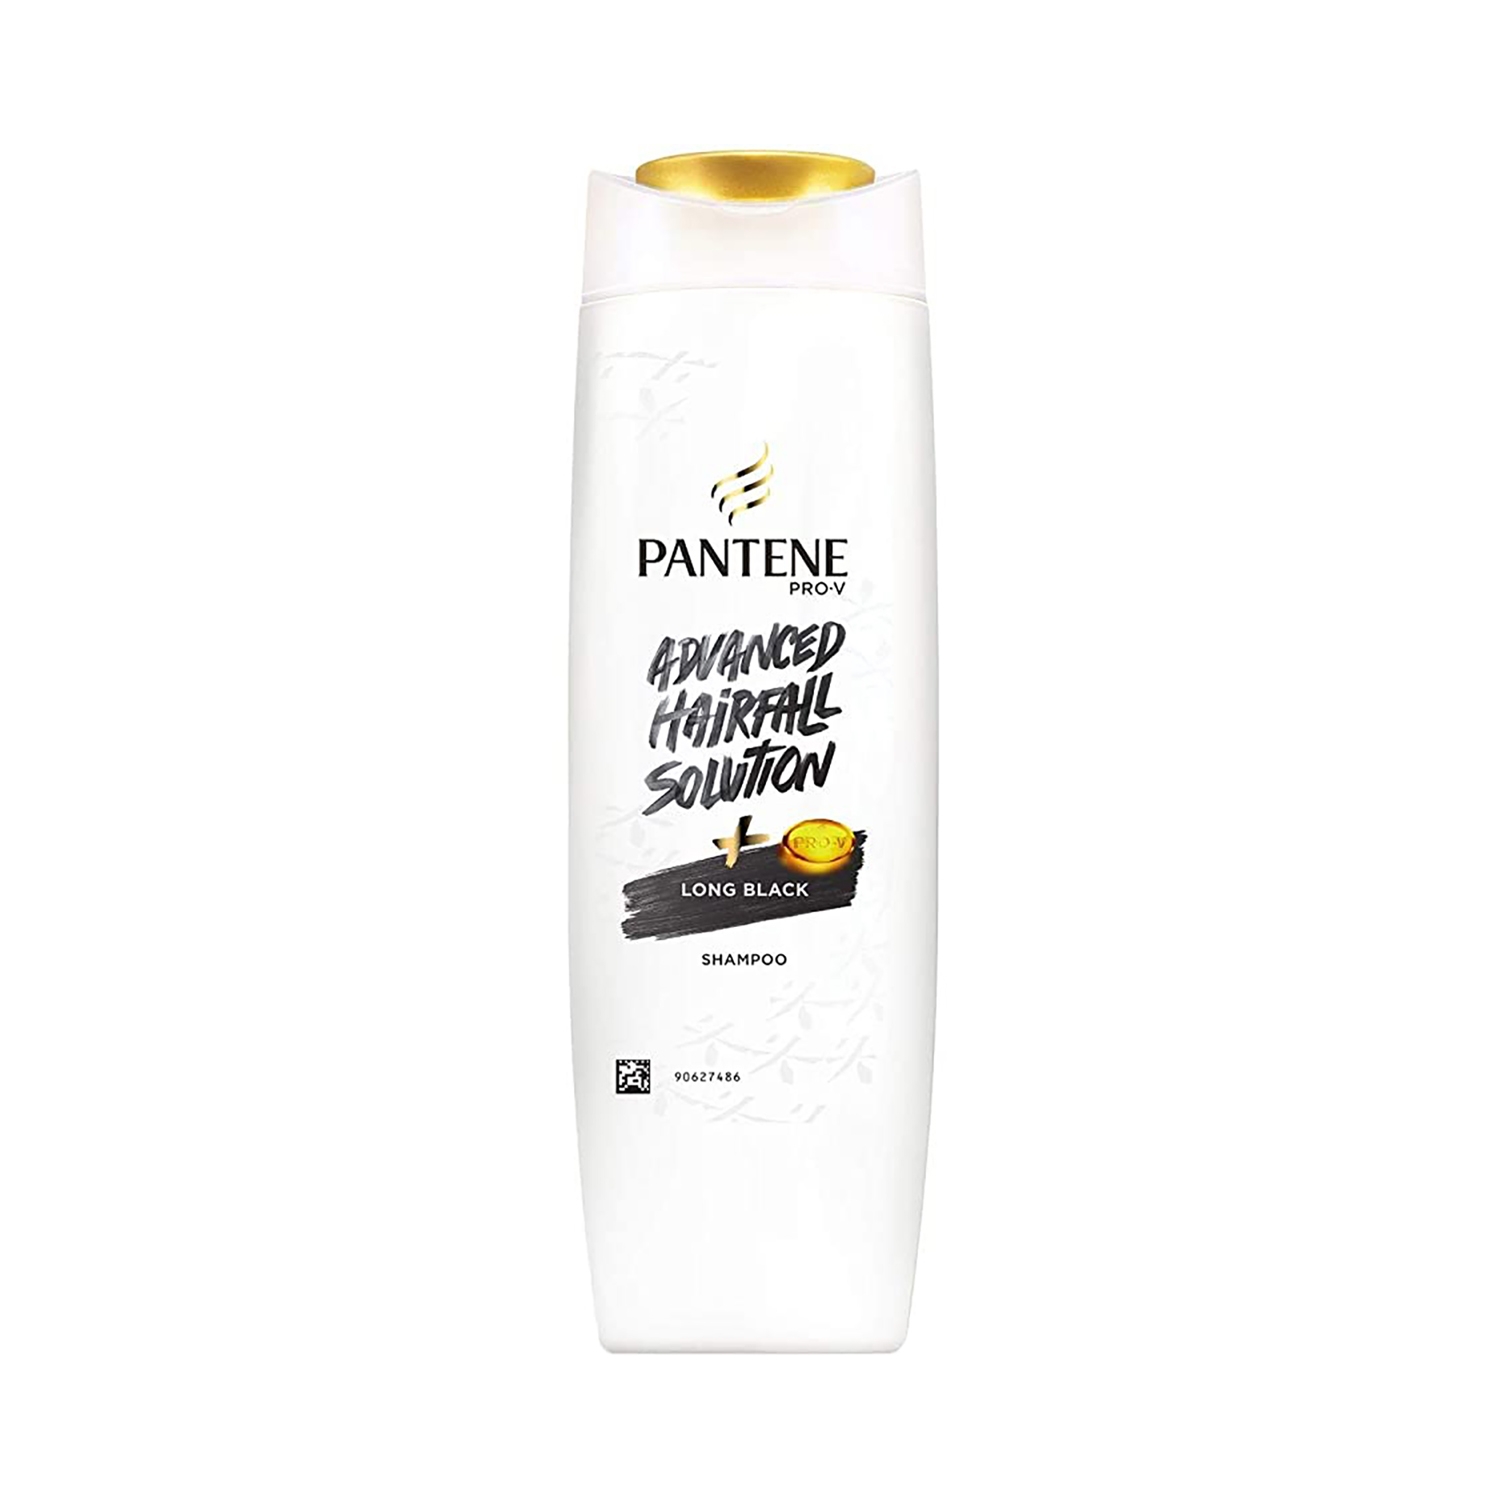 Pantene | Pantene Advanced Hairfall Solution Long Black Shampoo (75ml)